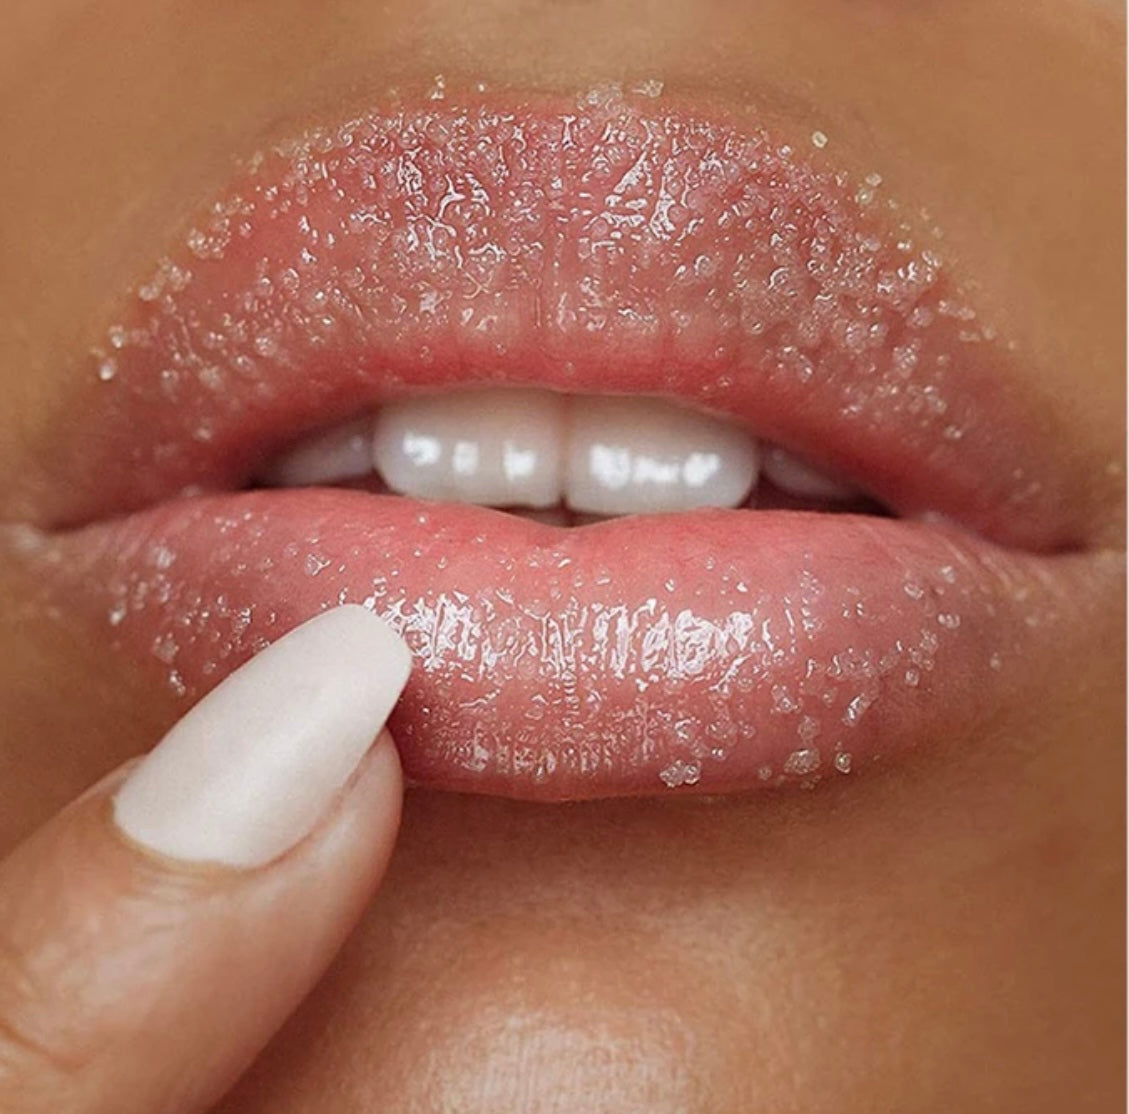 Strawberry Lip Scrub